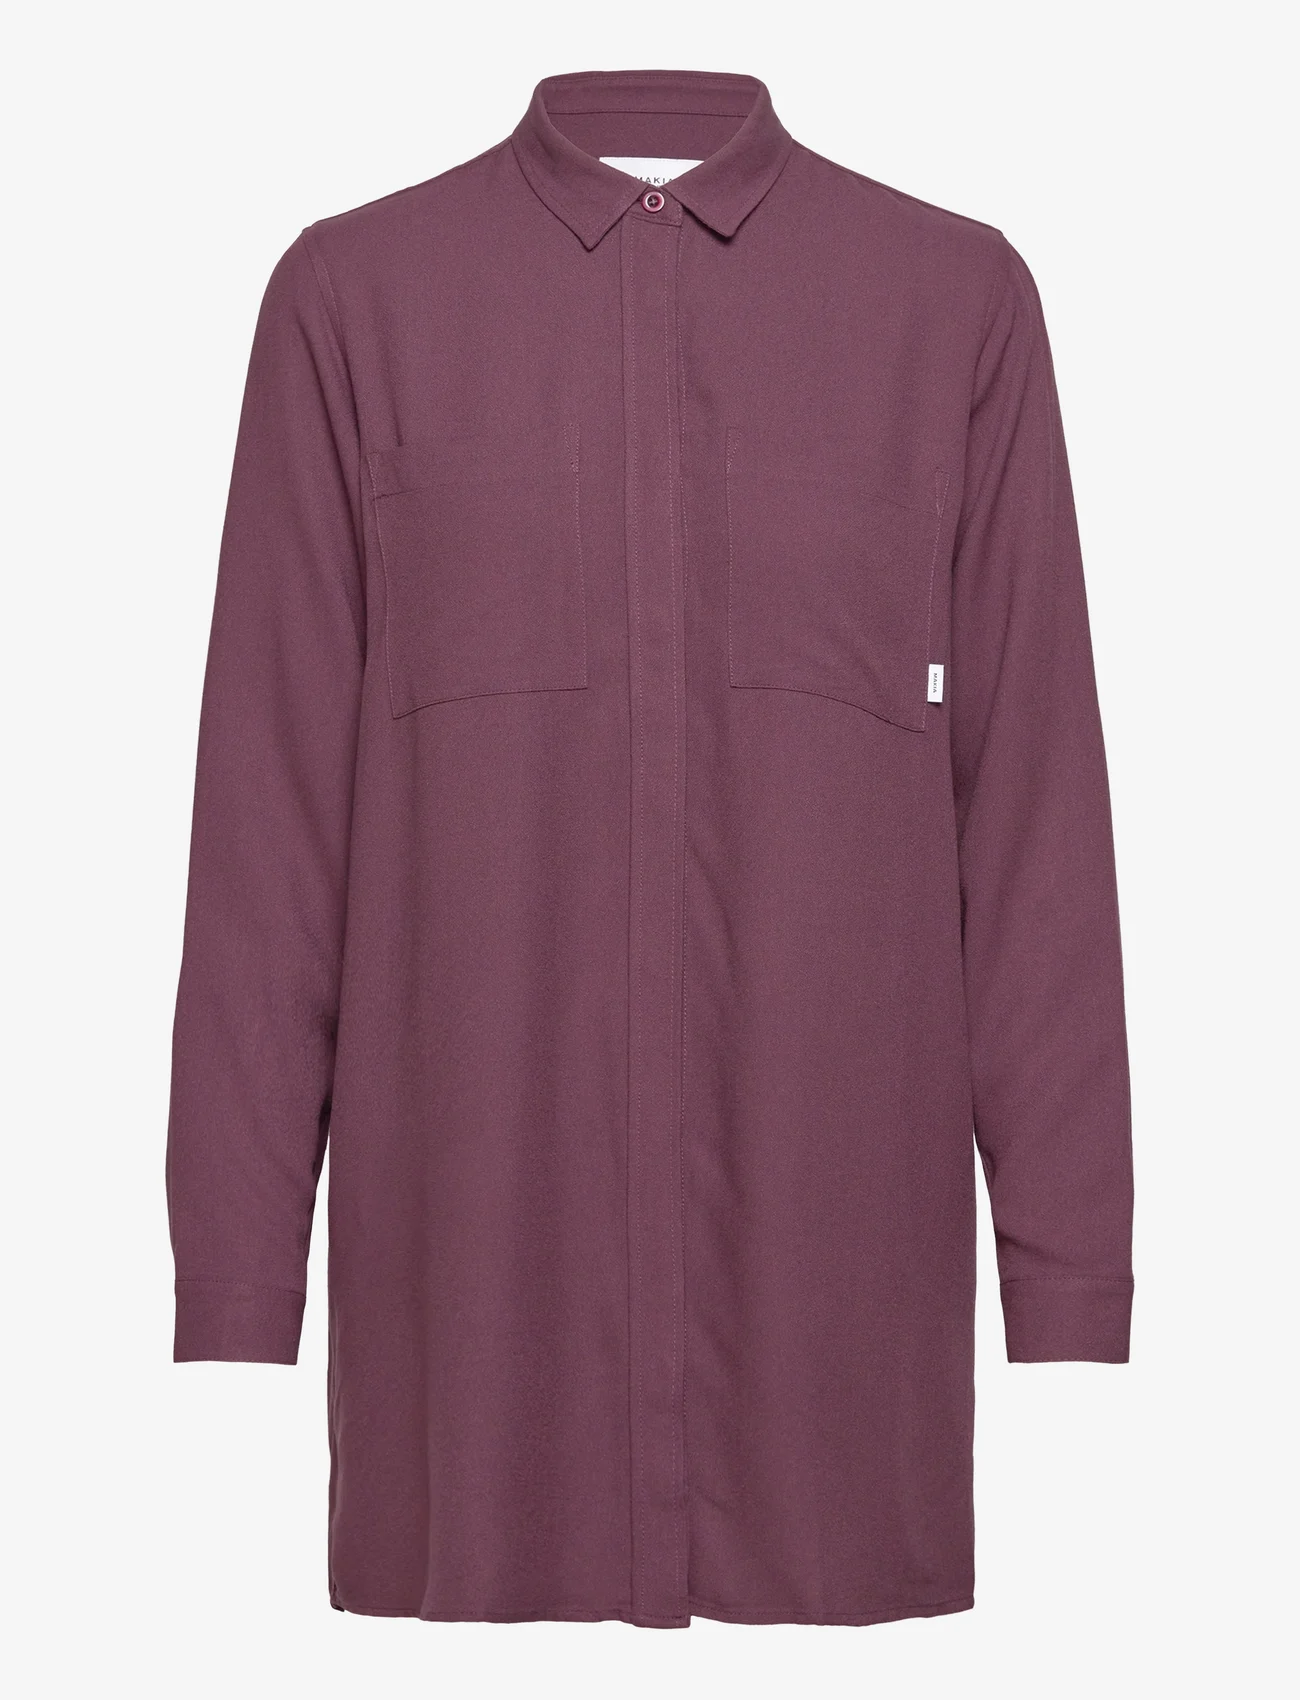 Makia - Nominal Shirt - langærmede skjorter - wine - 0